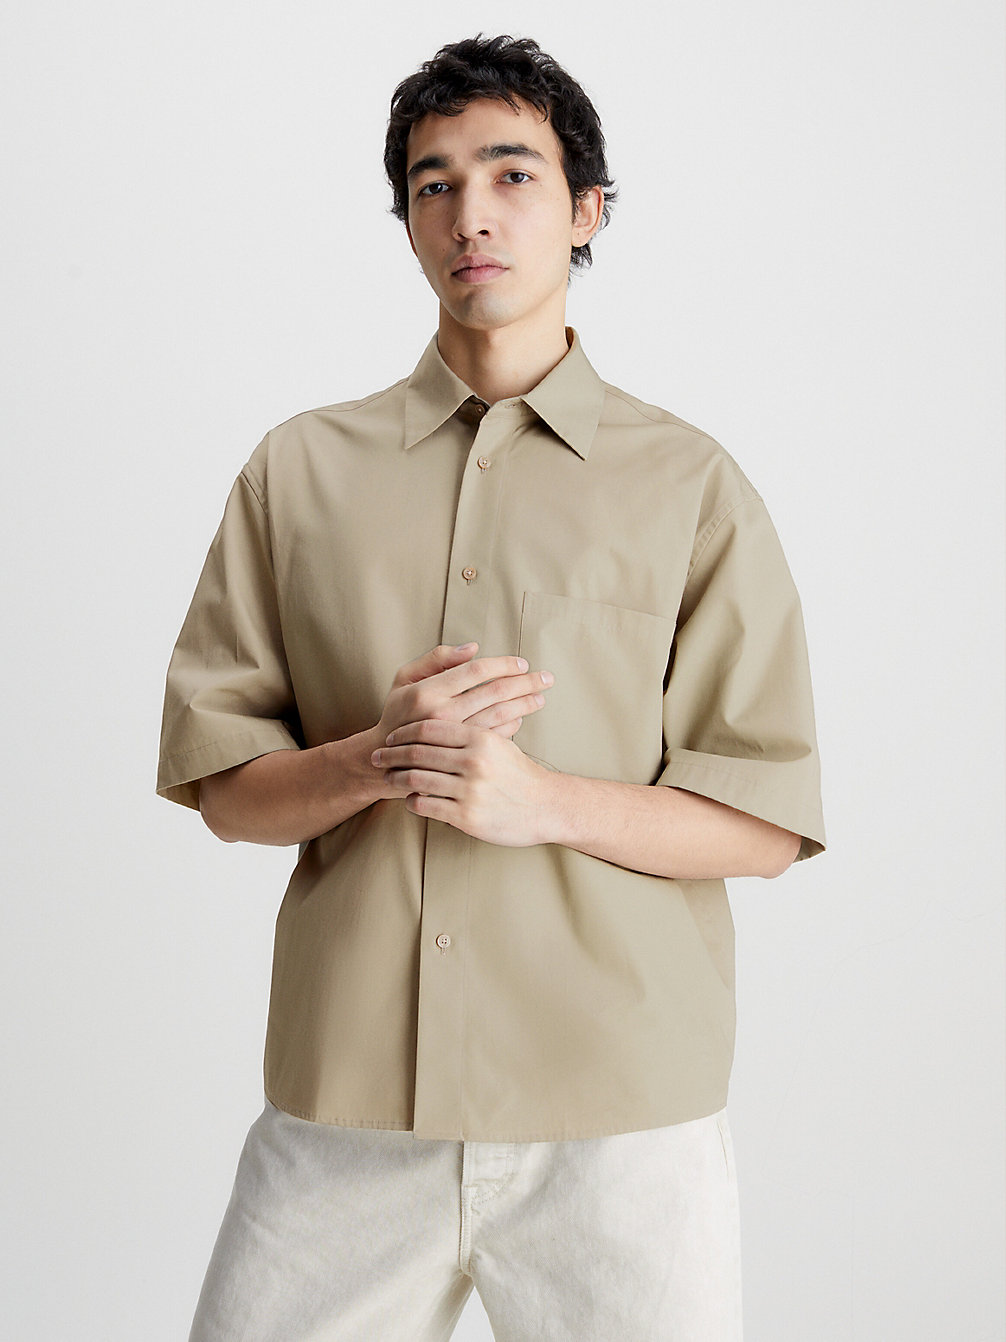 MOLDED CLAY Unisex Short Sleeve Shirt - CK Standards undefined men Calvin Klein